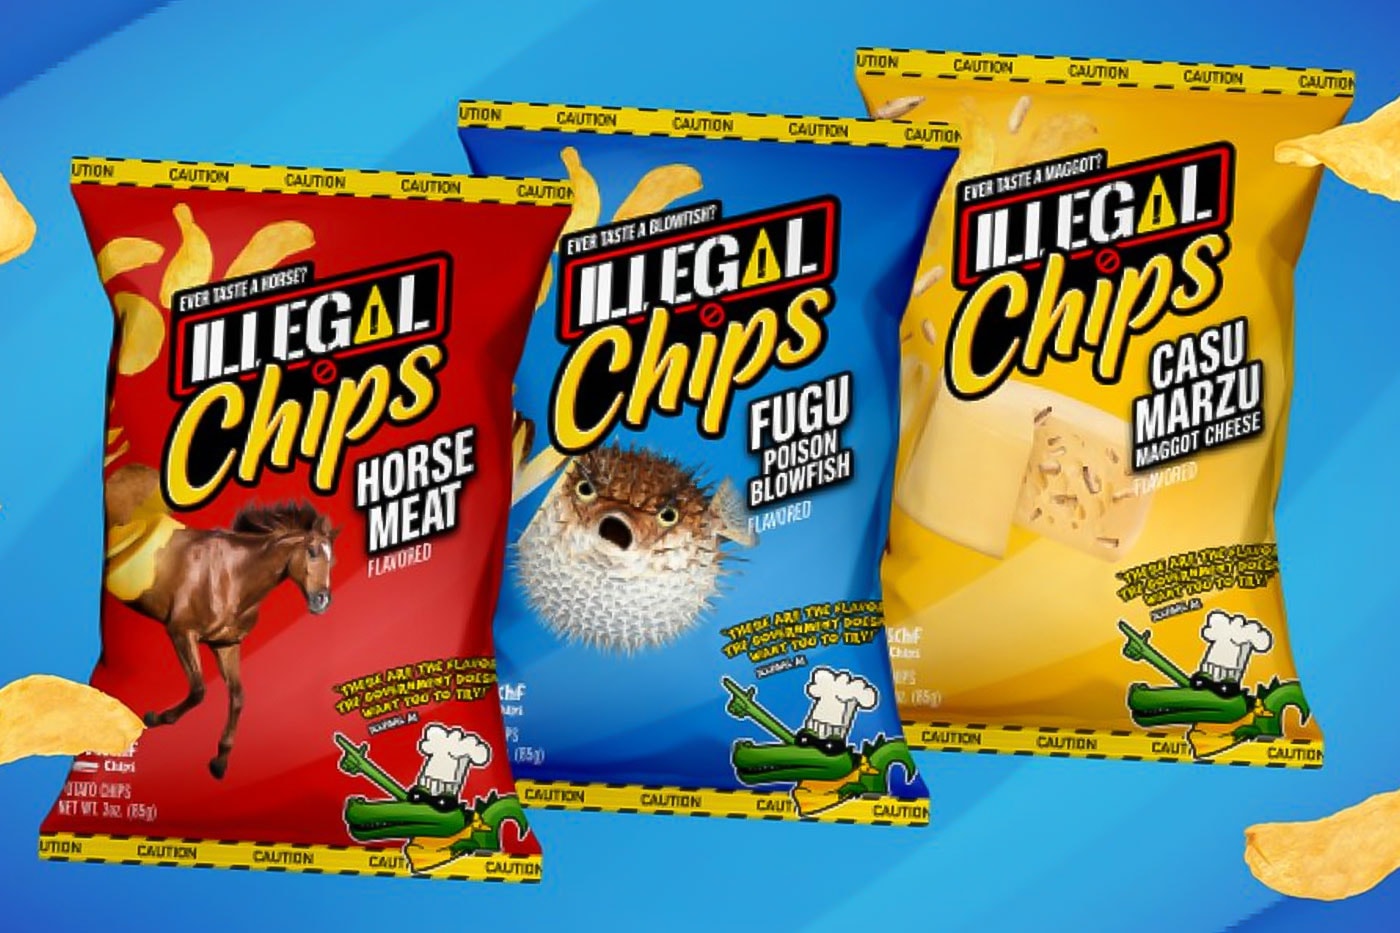 MSCHF Illegal chips horse meat casu marzu maggot cheese fugu poison blowfish flavors